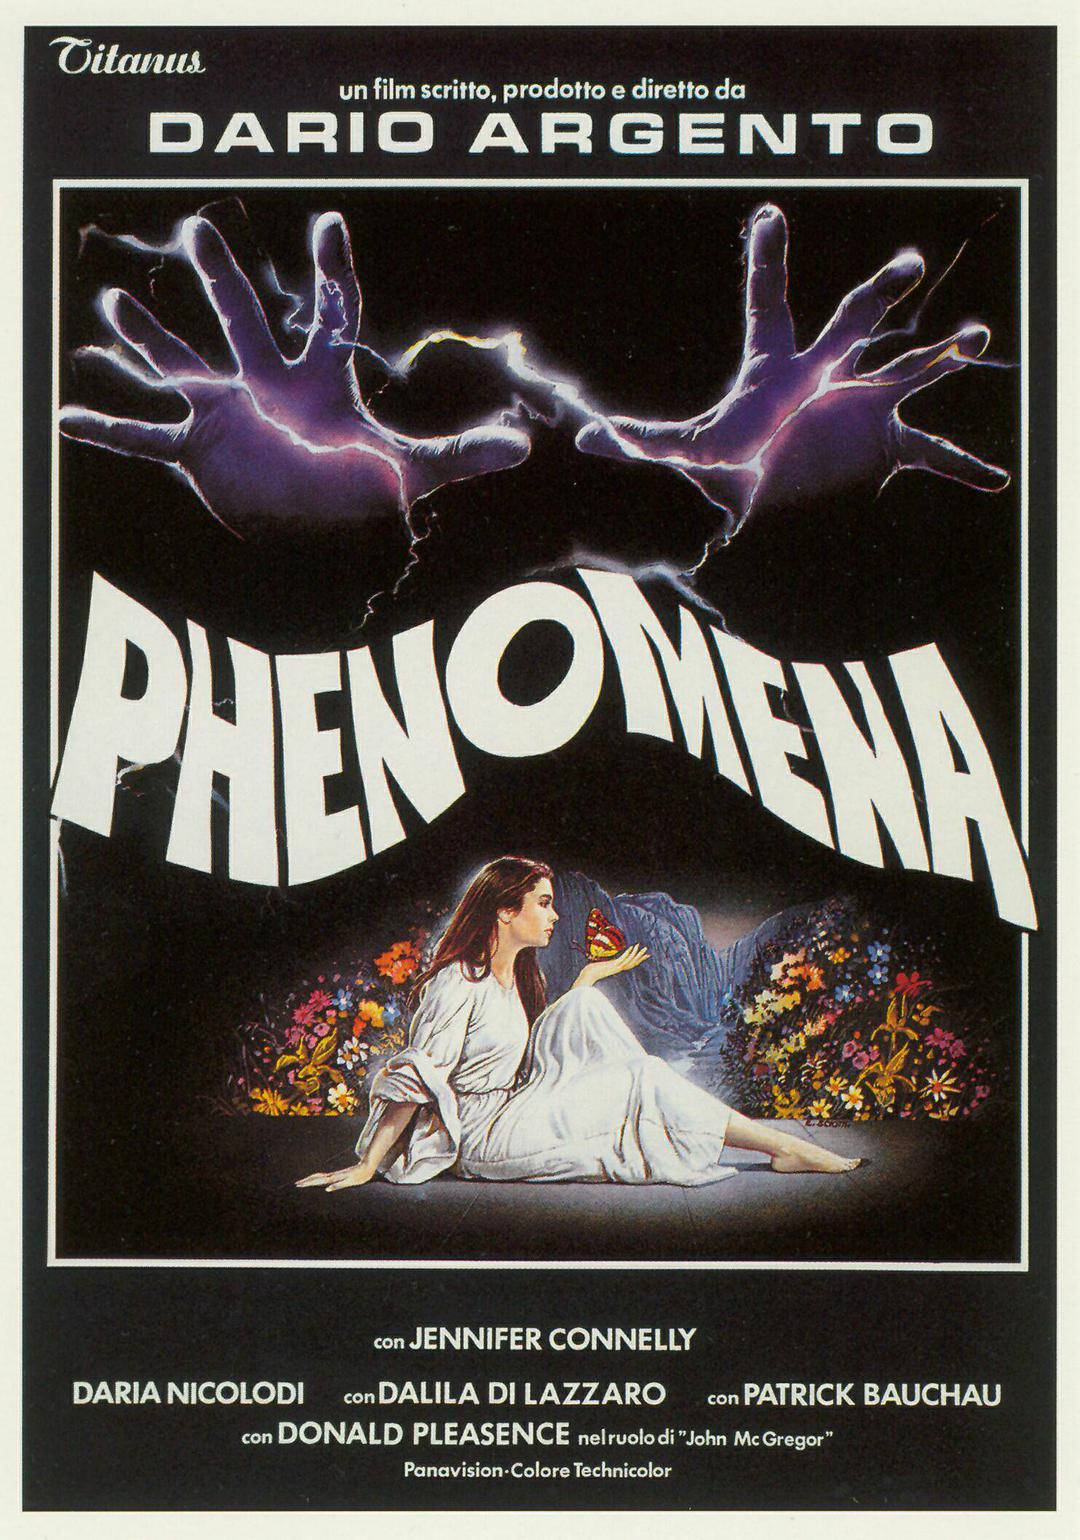 神话 Phenomena.1985.INTERNATIONAL.VERSION.1080p.BluRay.x264-OLDTiME 14.48GB